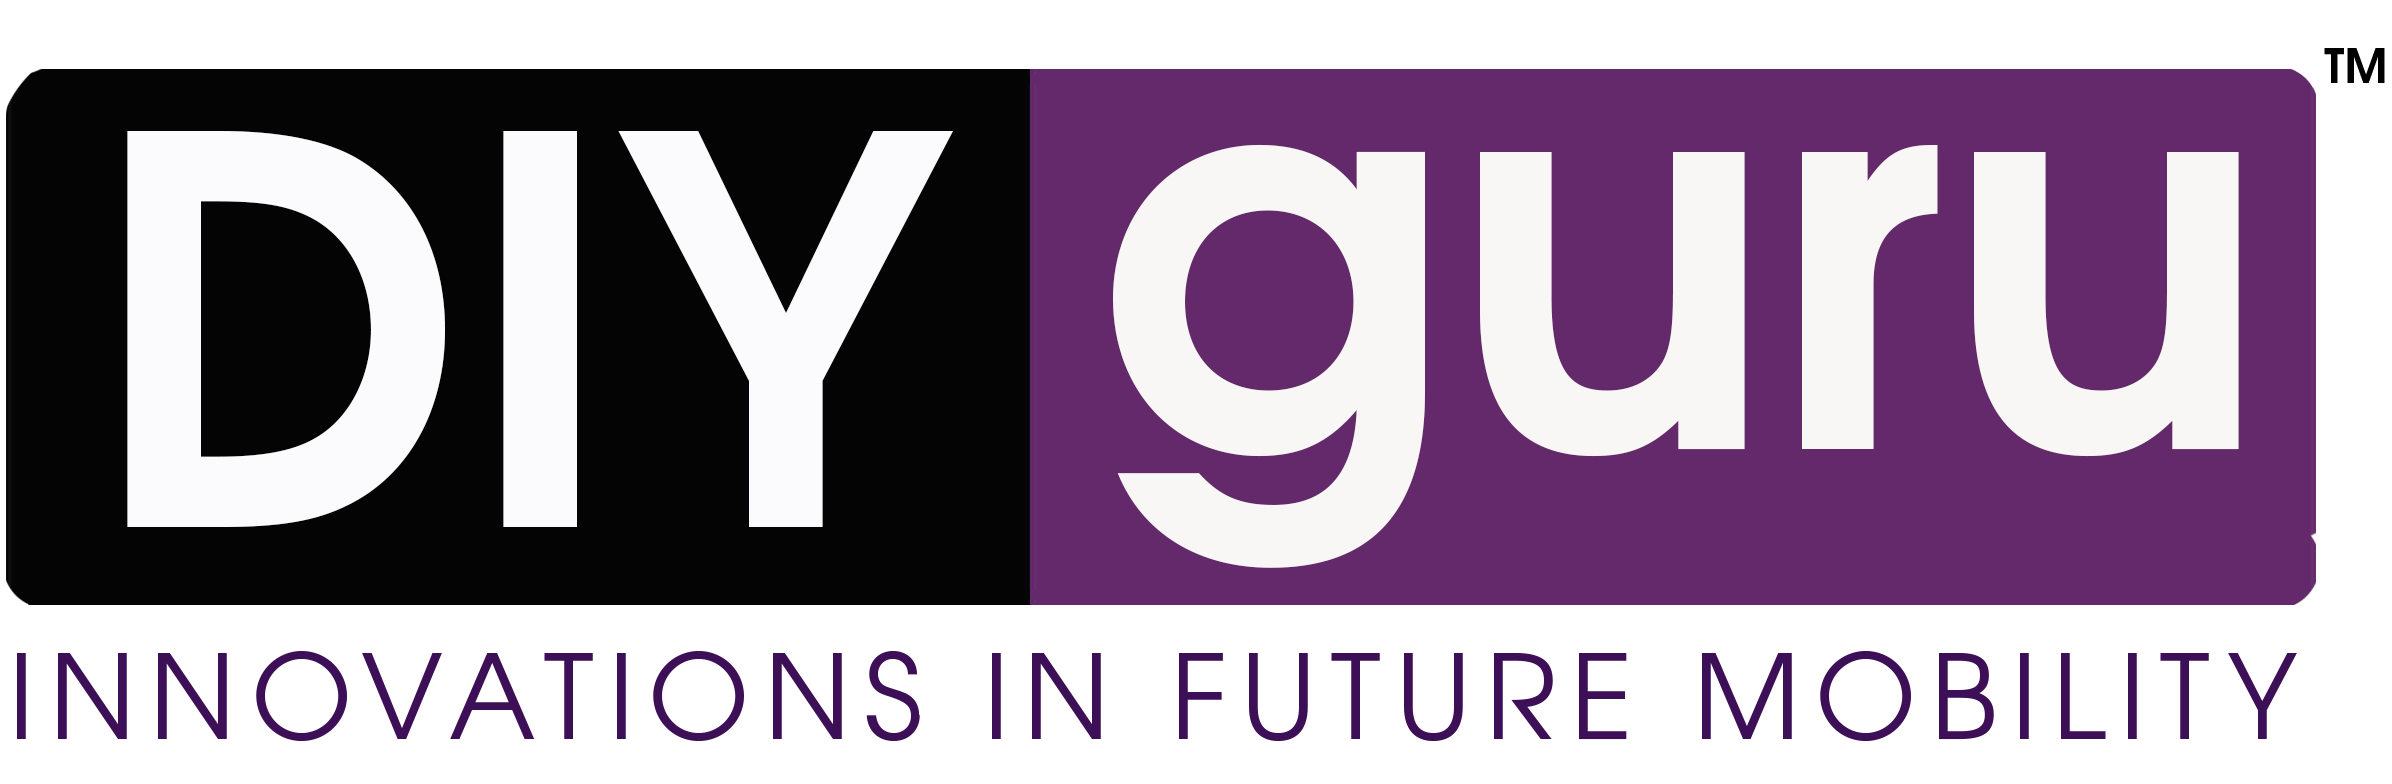 DIYguru – Future Mobility Review